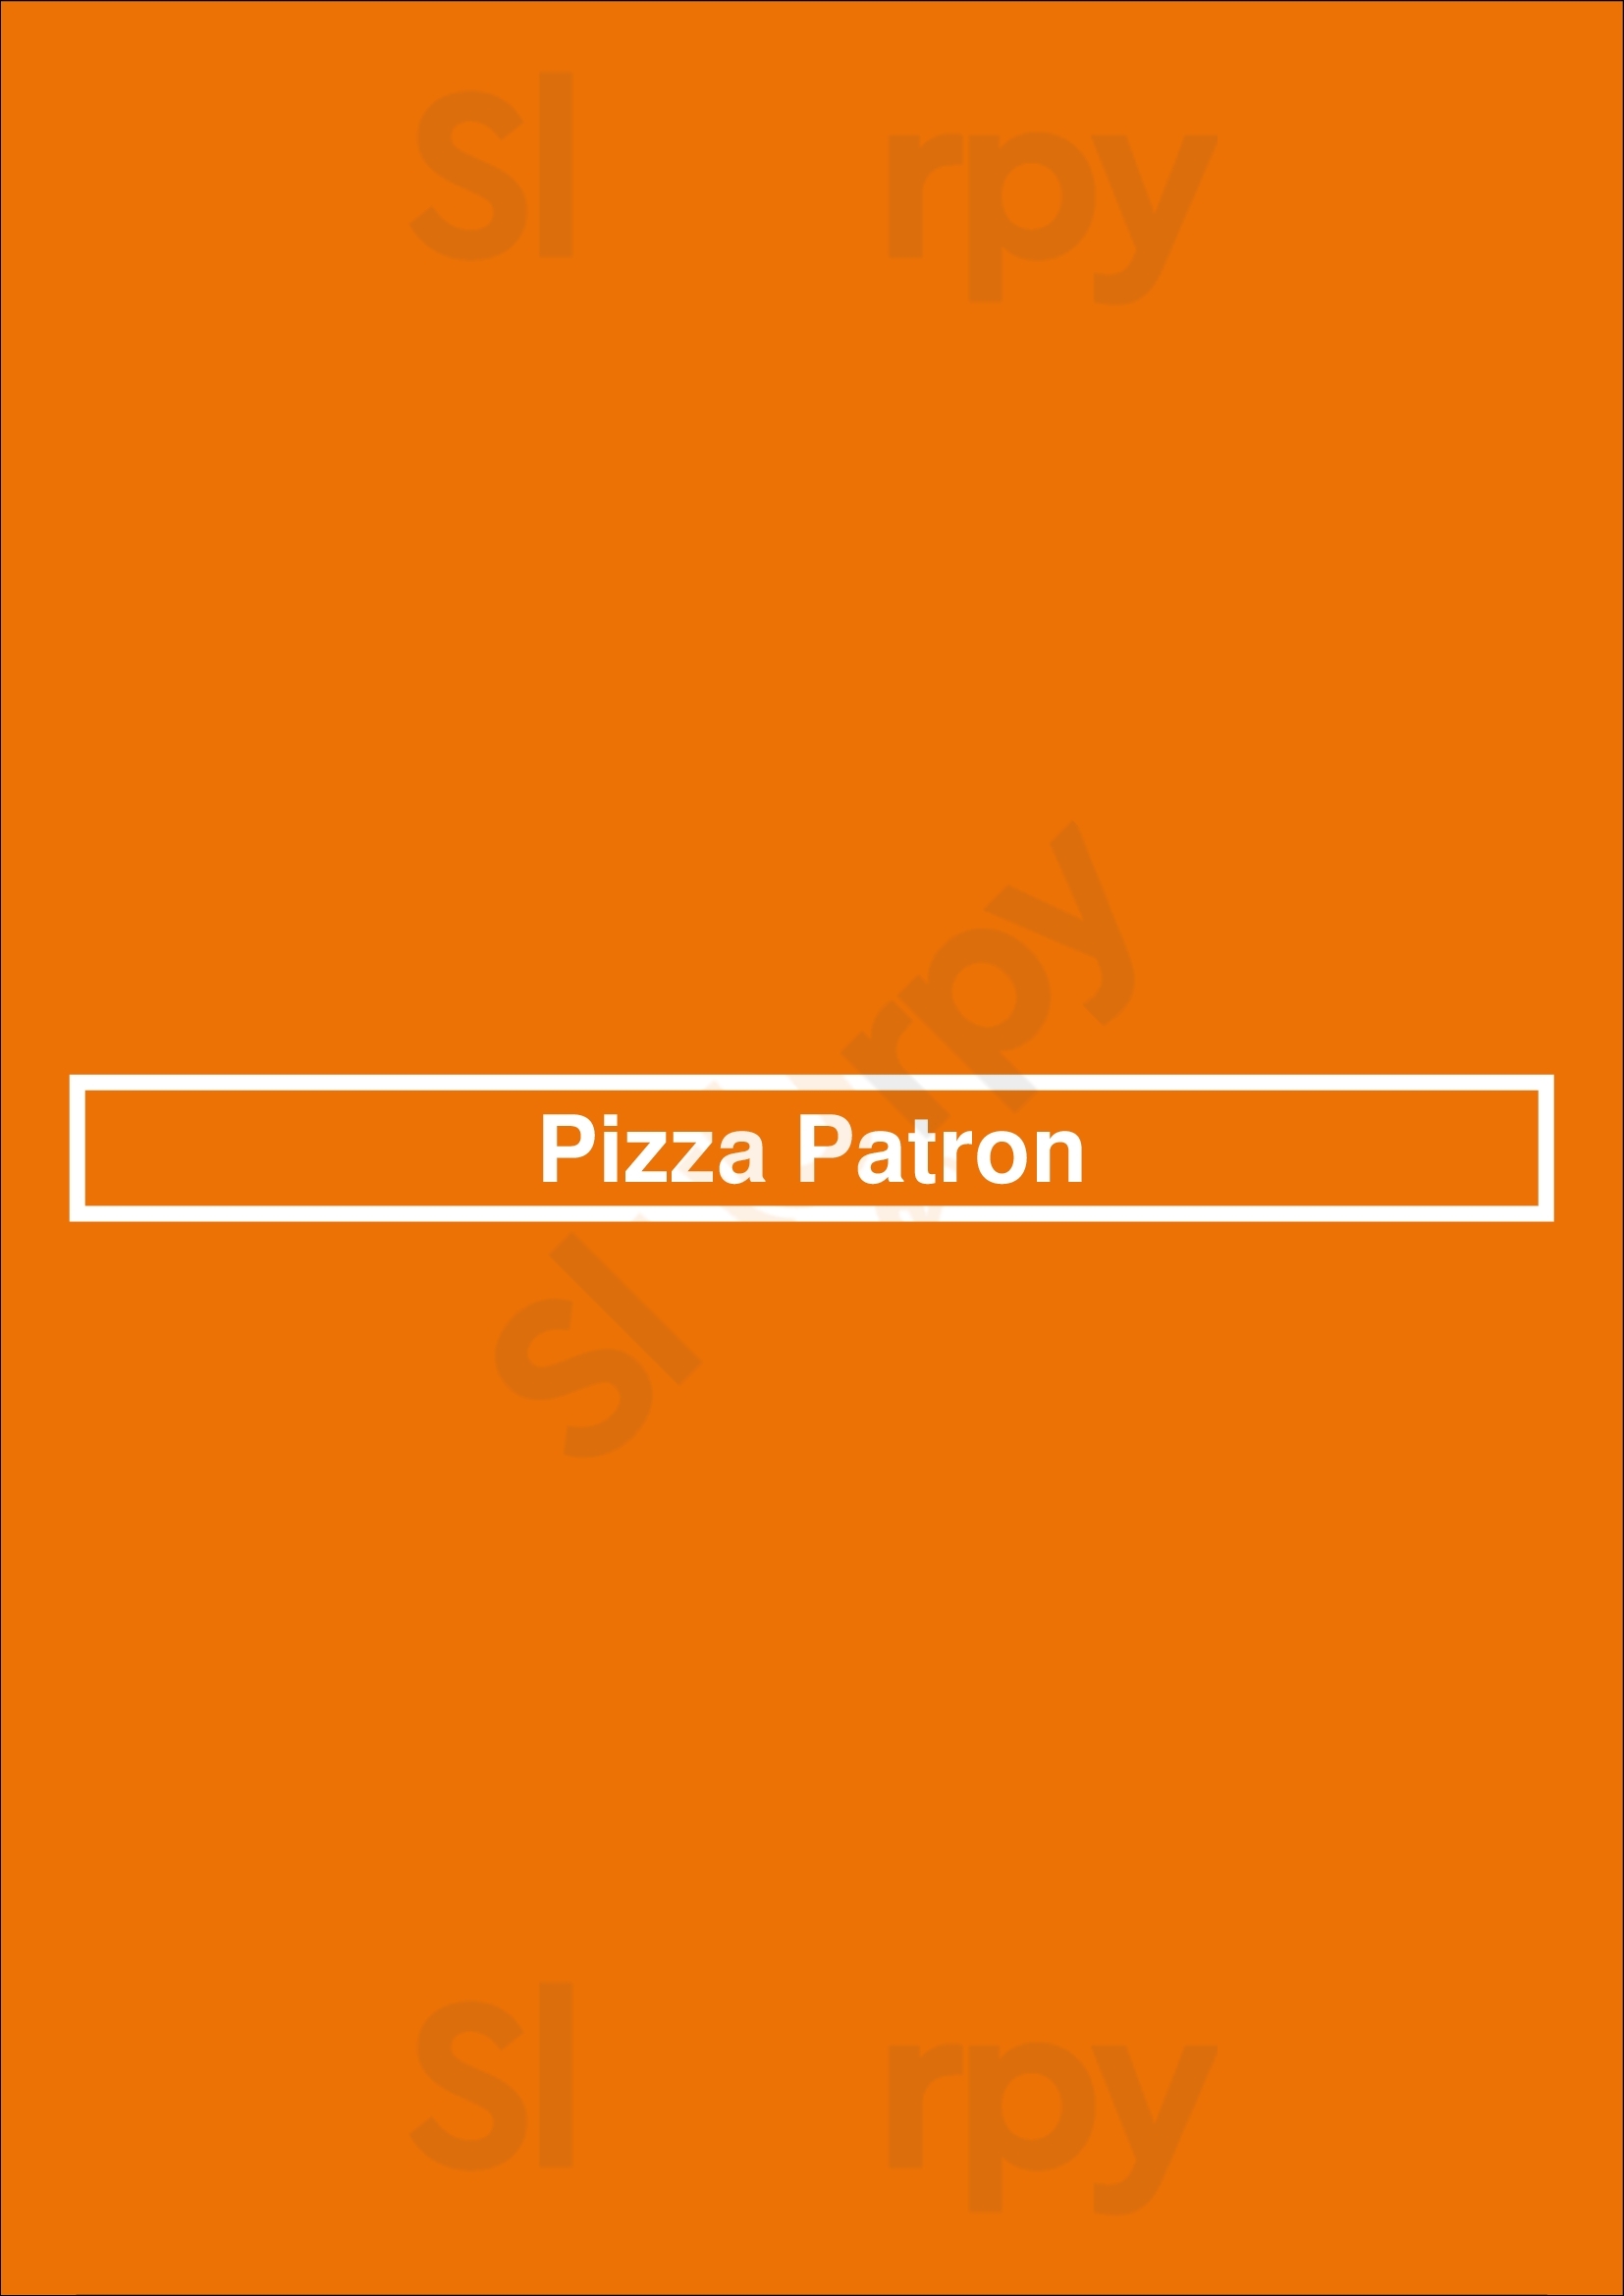 Pizza Patron Houston Menu - 1